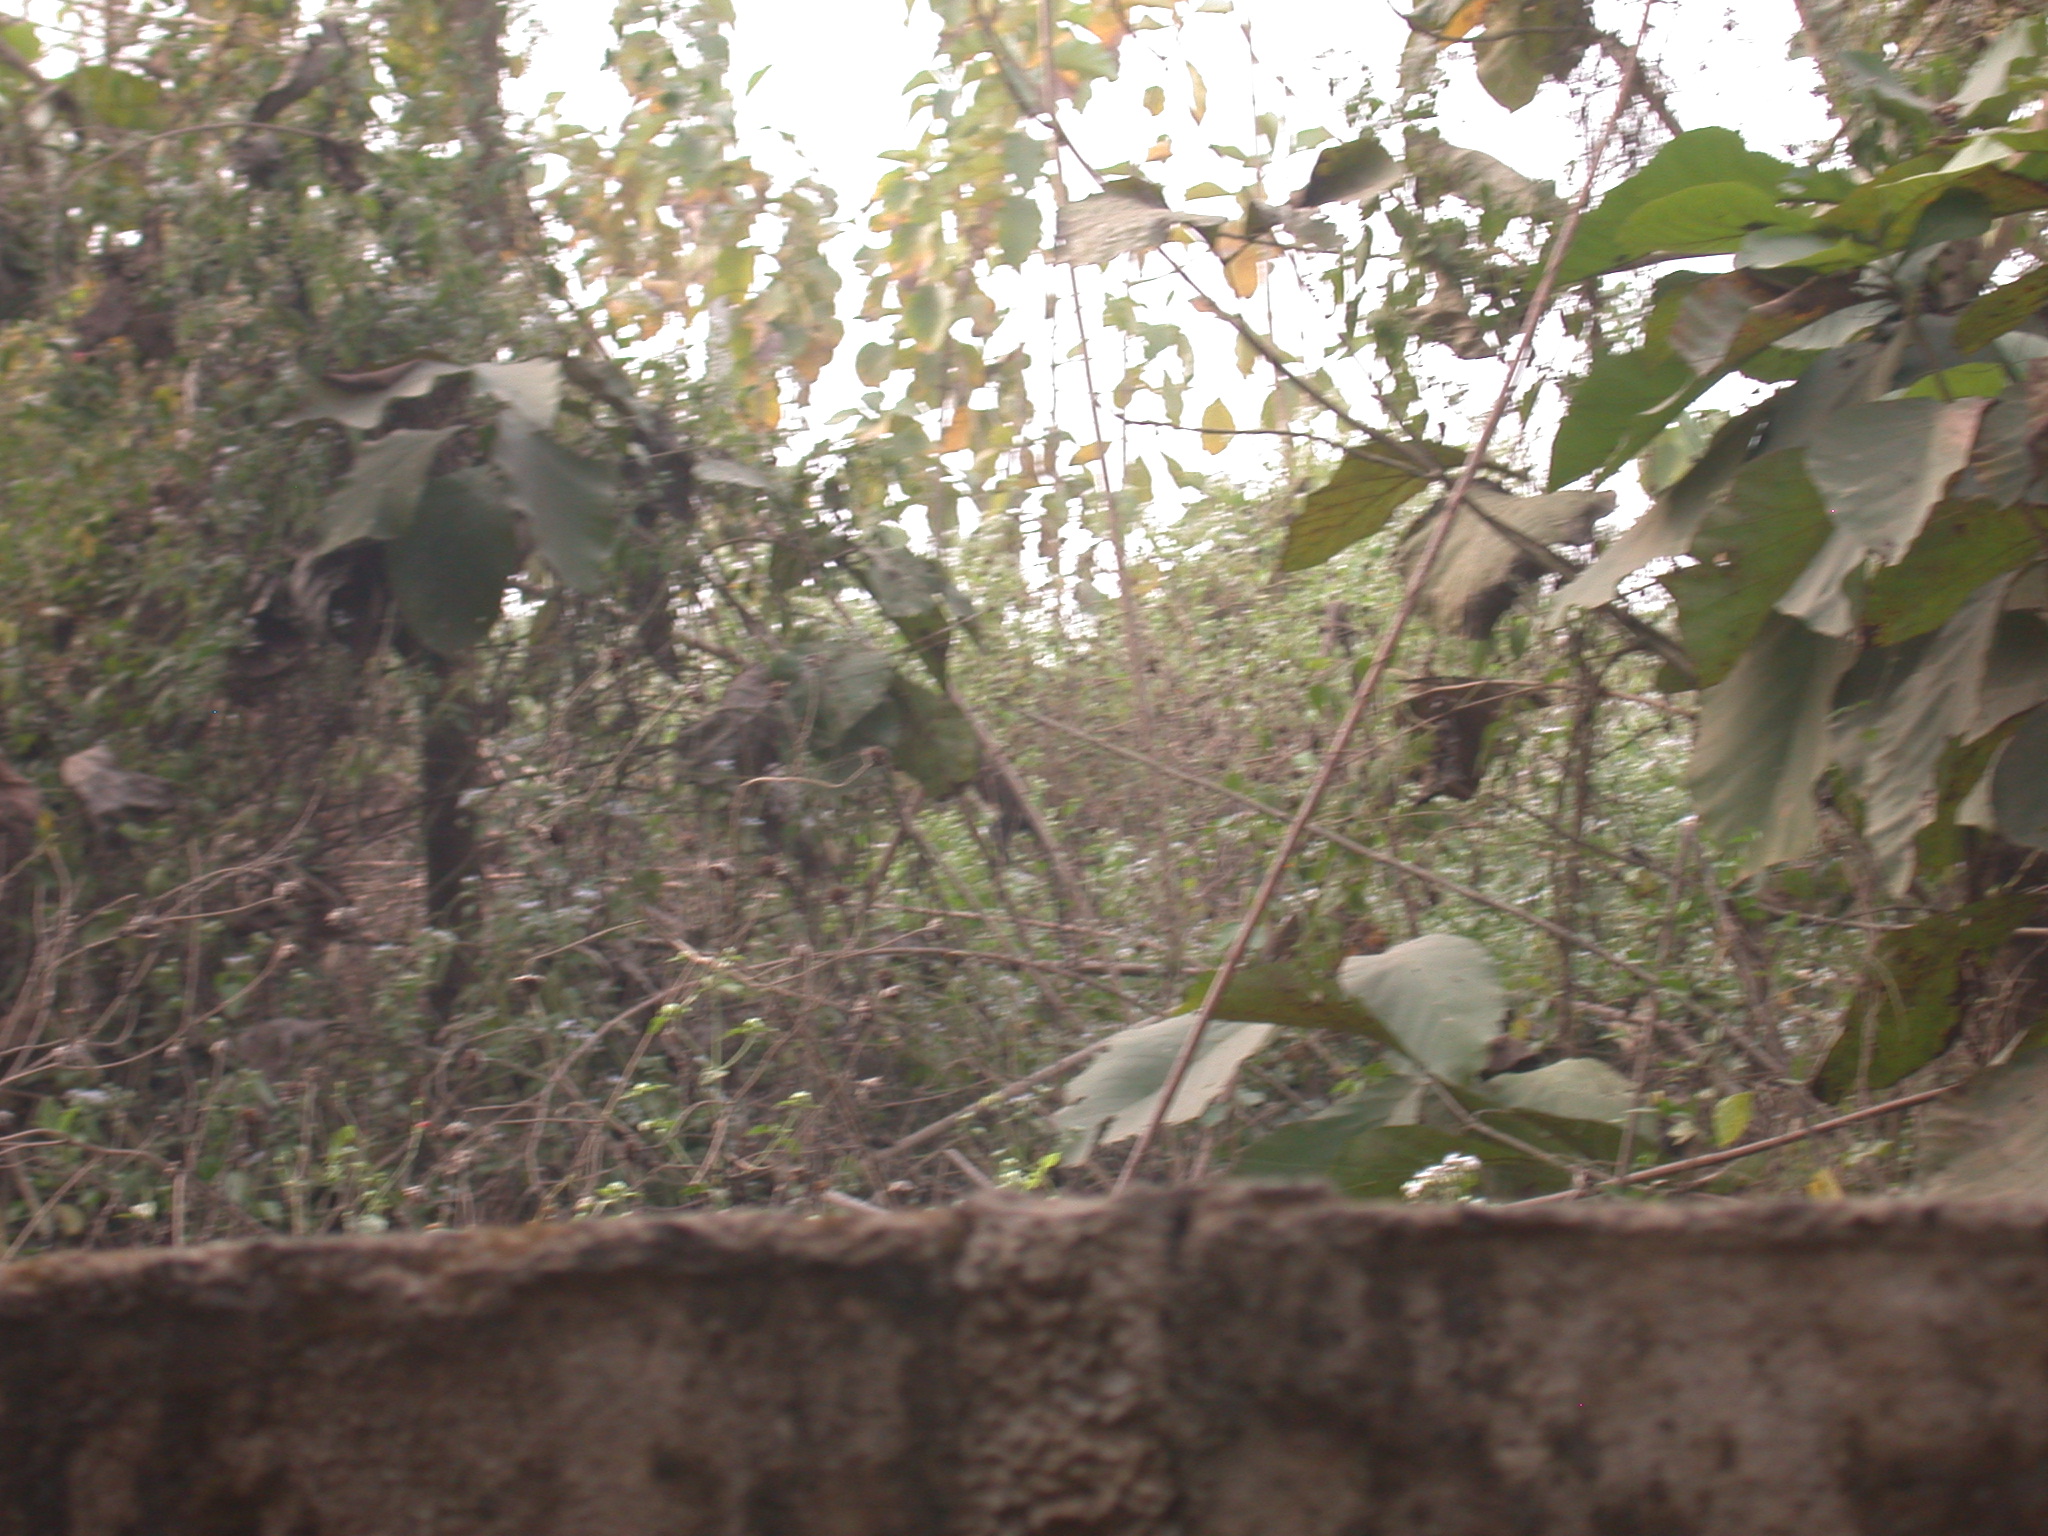 Monkeys Hiding in Vegetation by Access Road, Osun Sacred Grove, Oshogbo, Nigeria